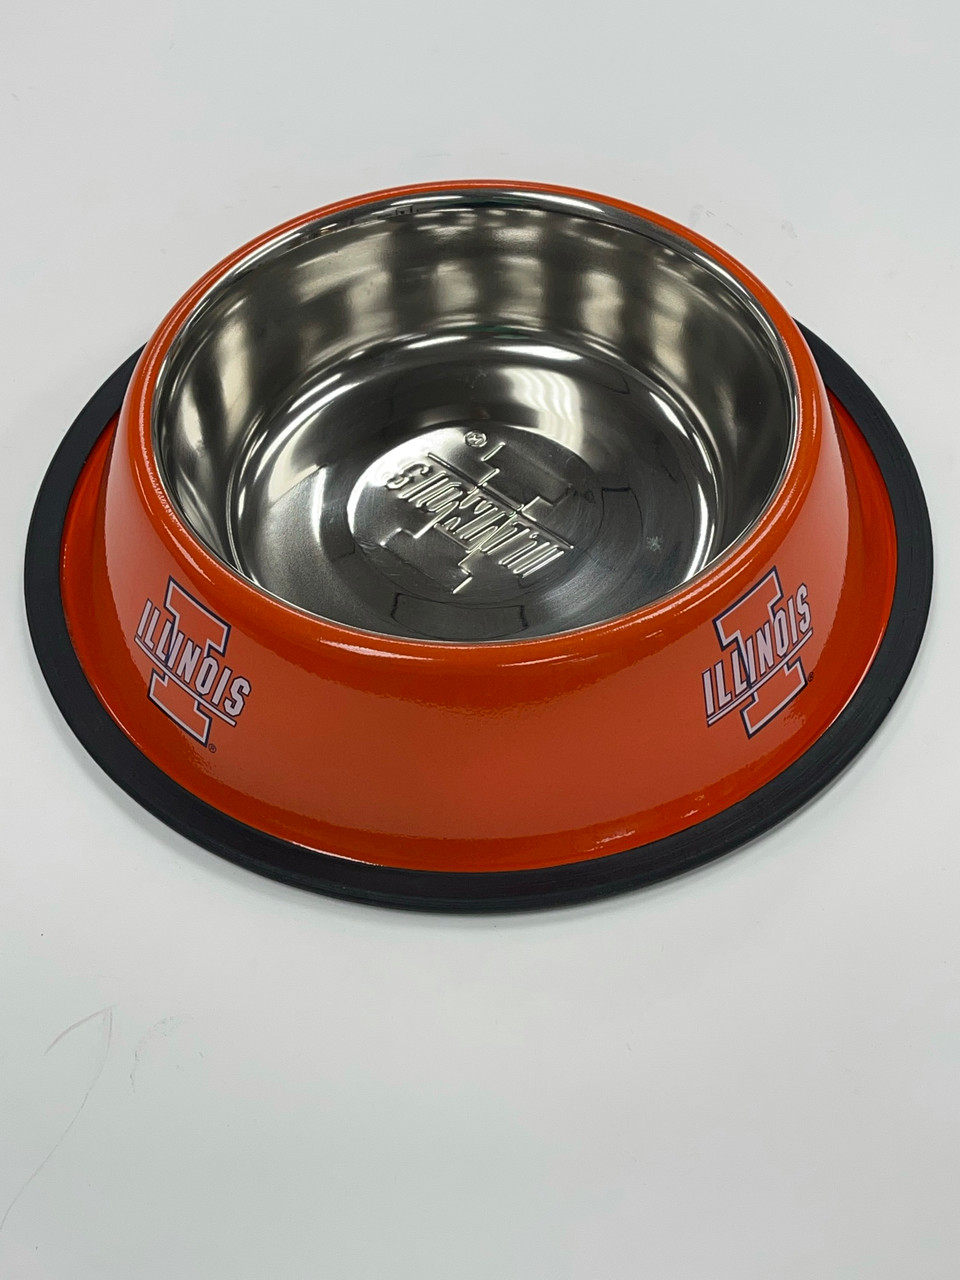 University of Illinois Stainless Steel Dog Bowl